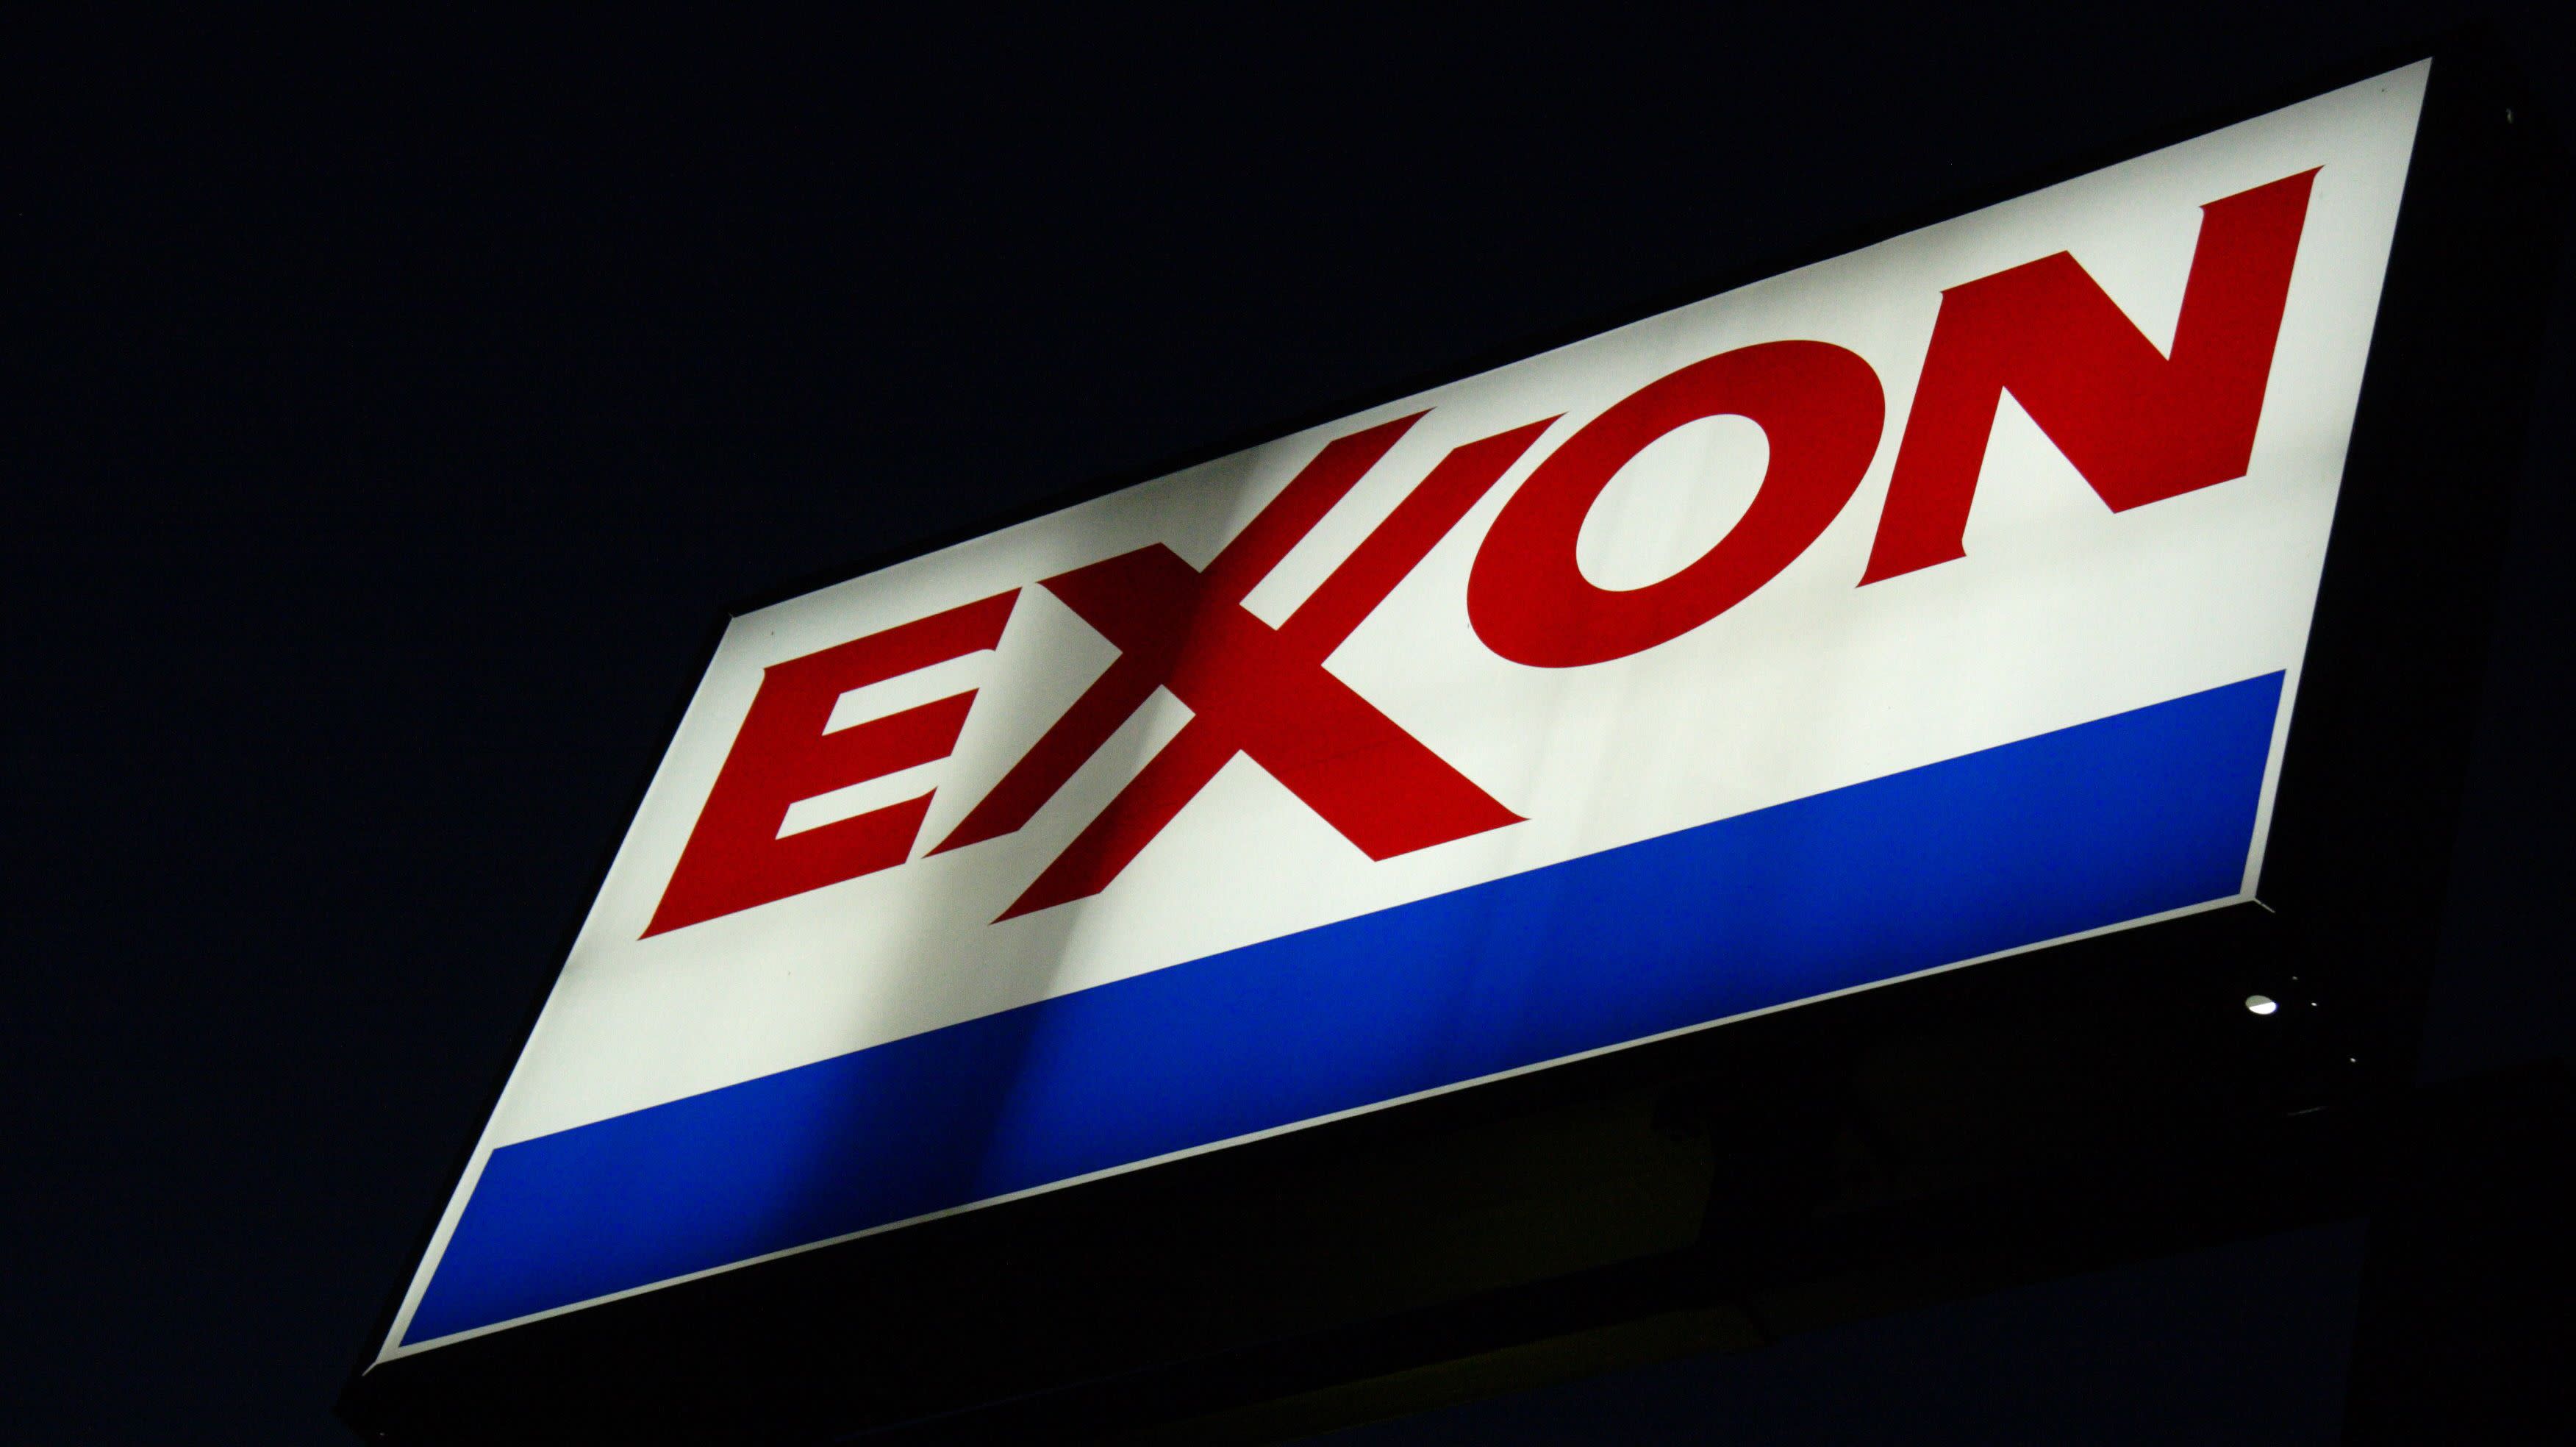 Exxon 1Q Earnings Snapshot